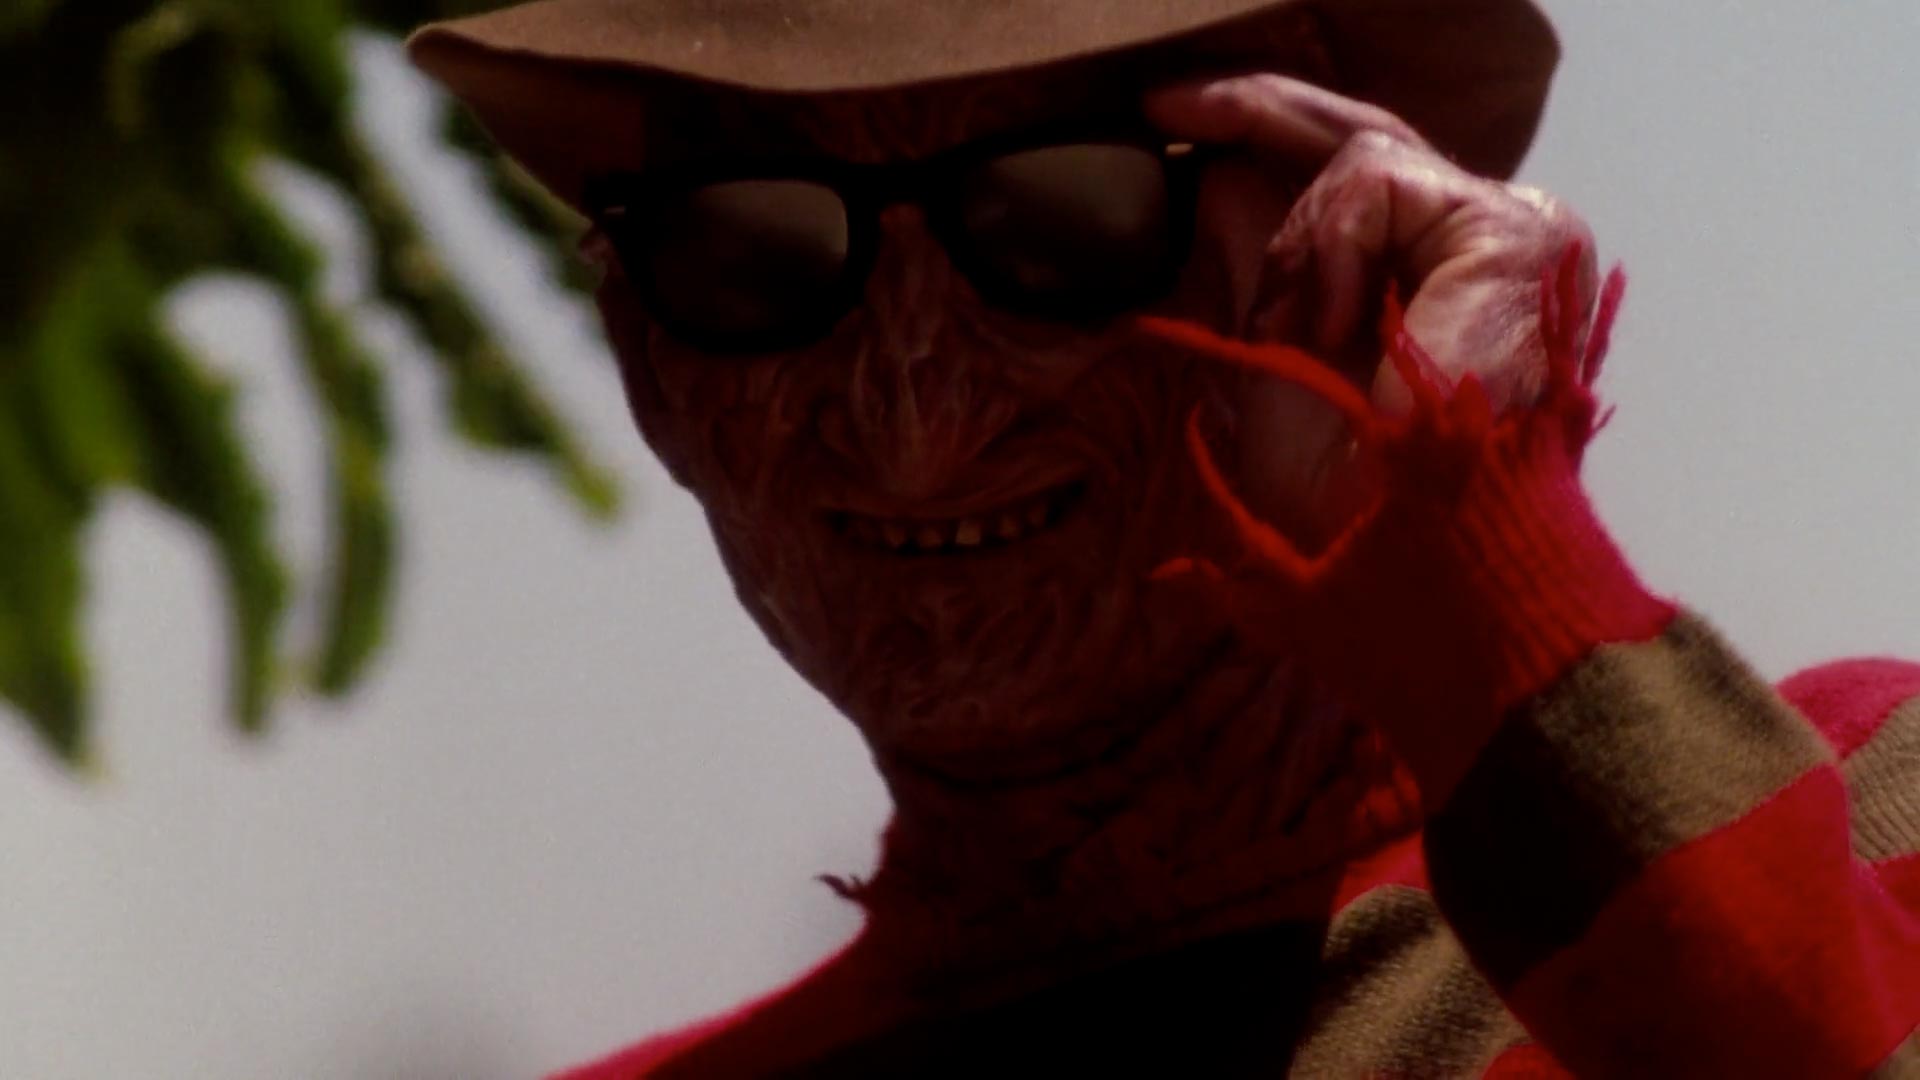 Ray Ban Freddy Krueger in A Nightmare on Elm Street 4: The Dream Master